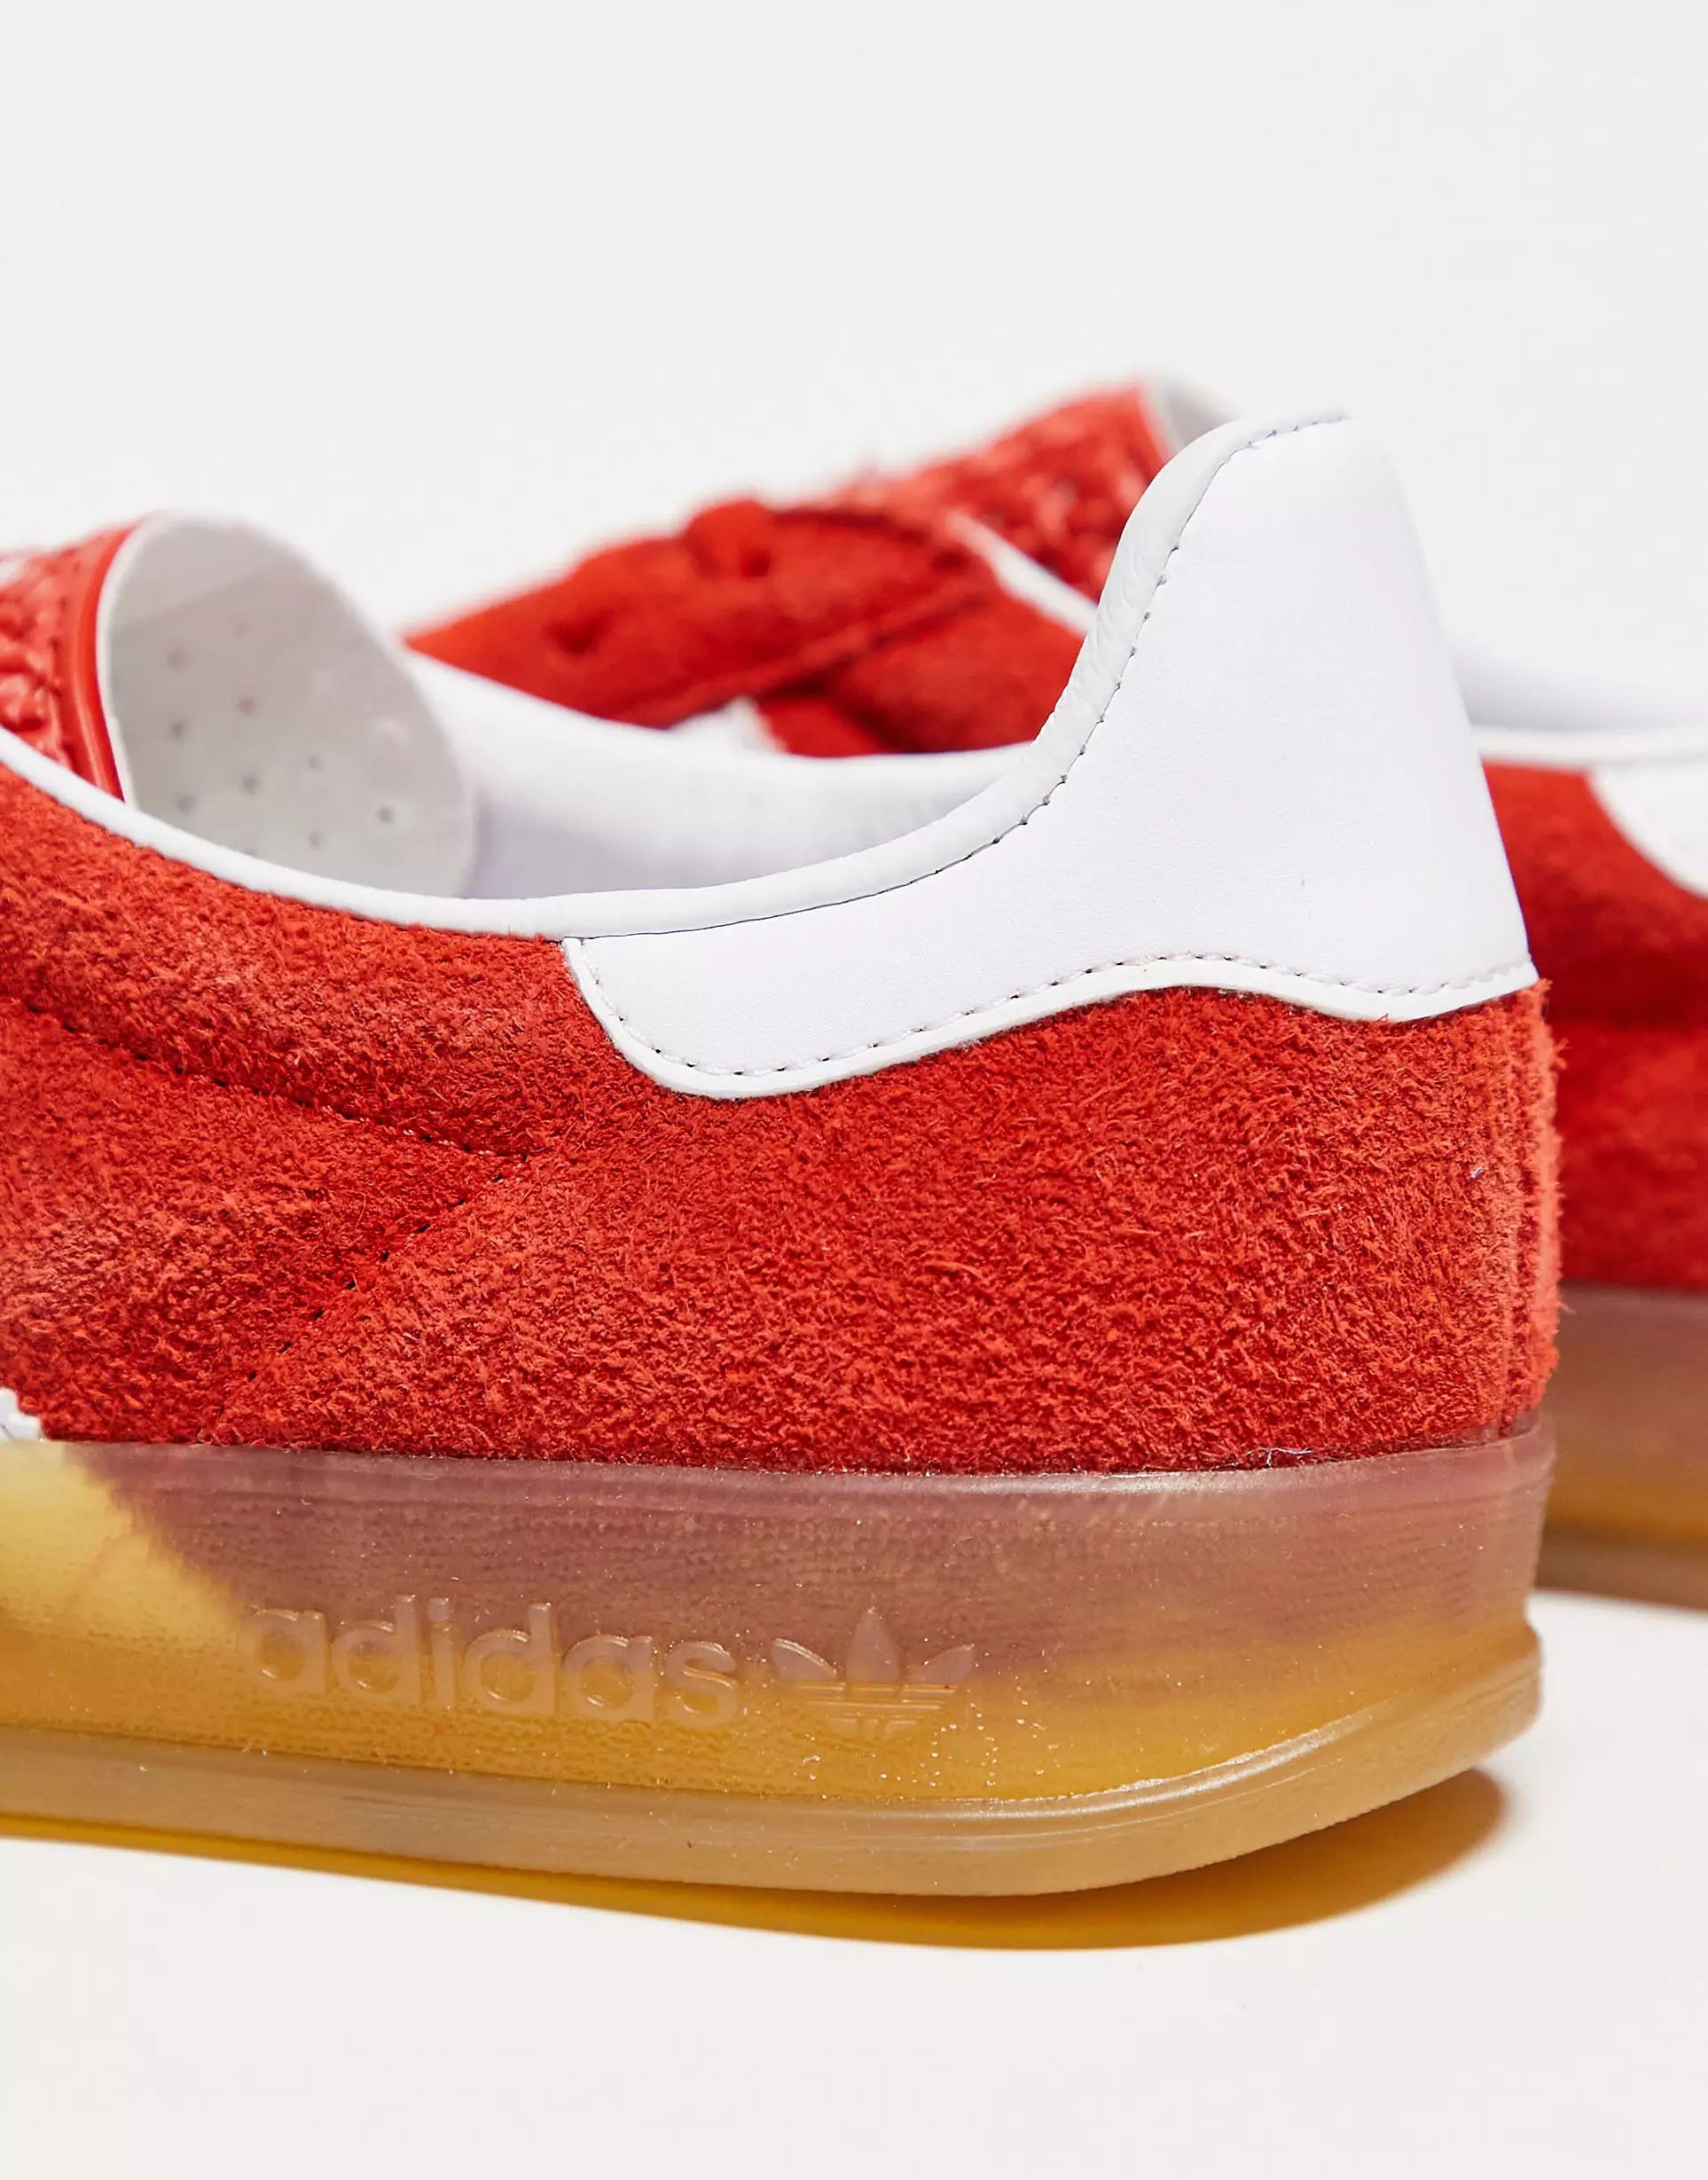 adidas Originals Gazelle Indoor gum sole trainers in red - RED | ASOS (Global)